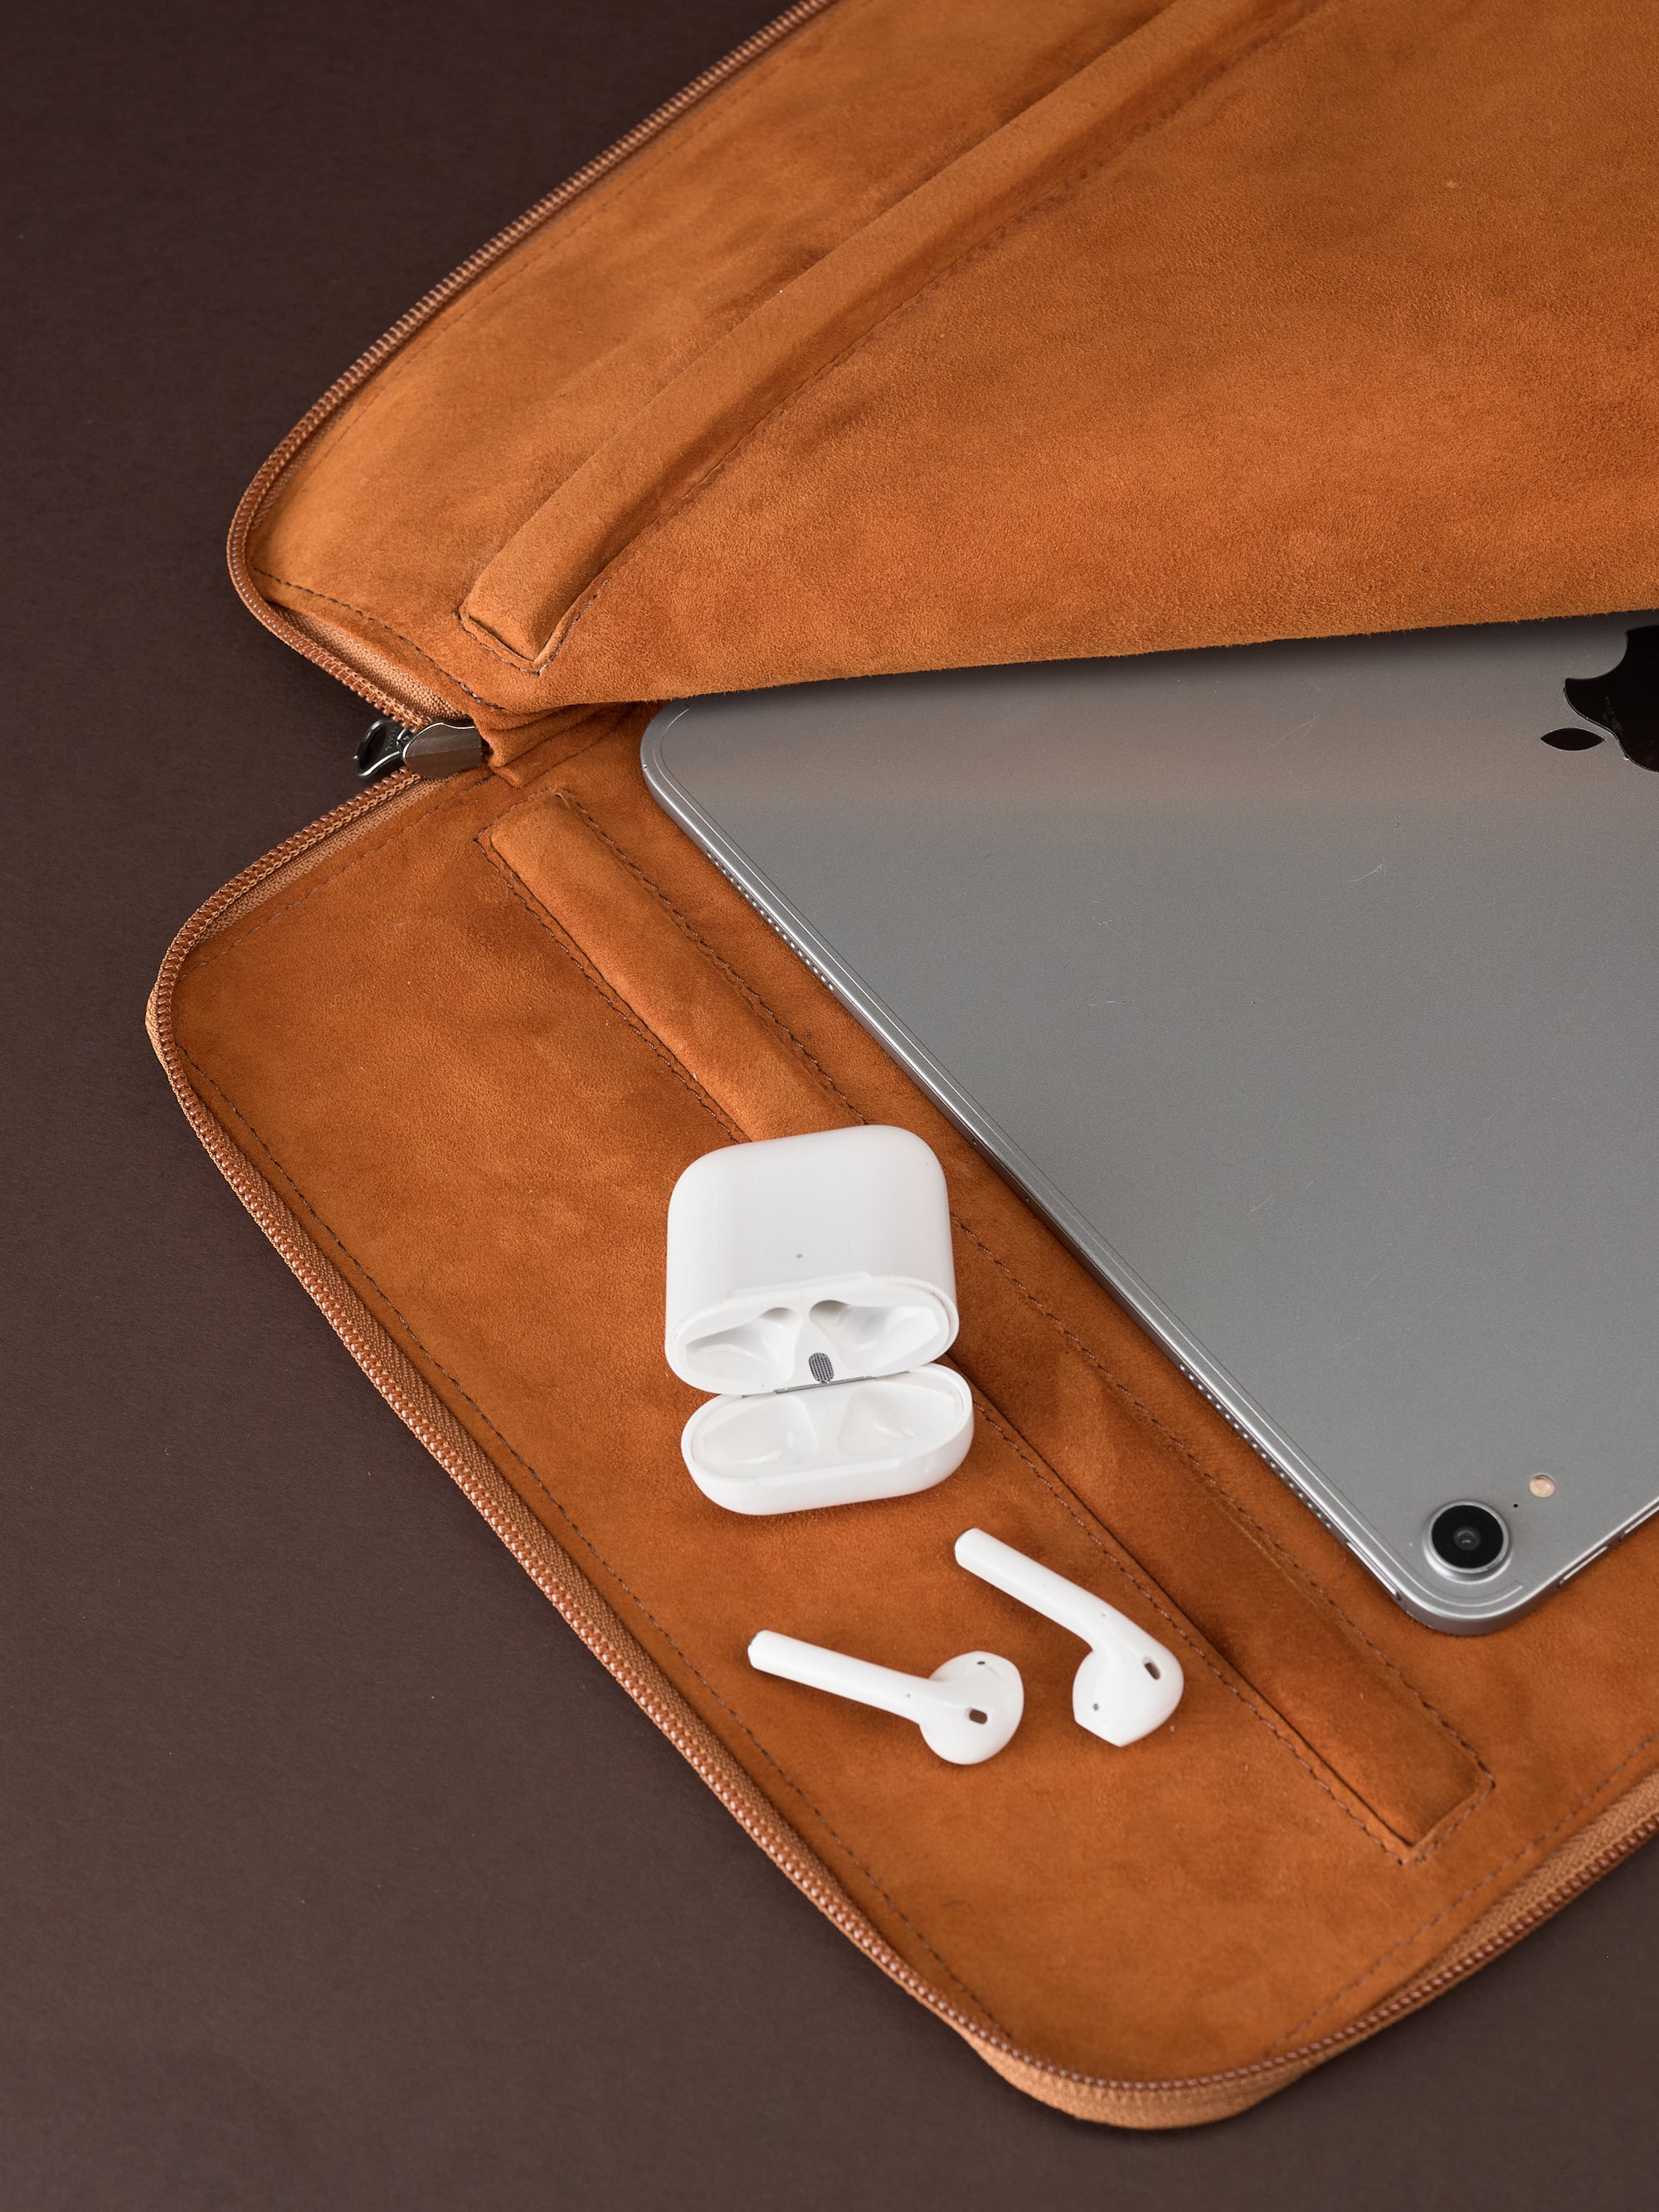 Suede interior. Draftsman 6 Custom iPad Case iPad Pro 11-inch, iPad Pro 12.9 by Capra Leather